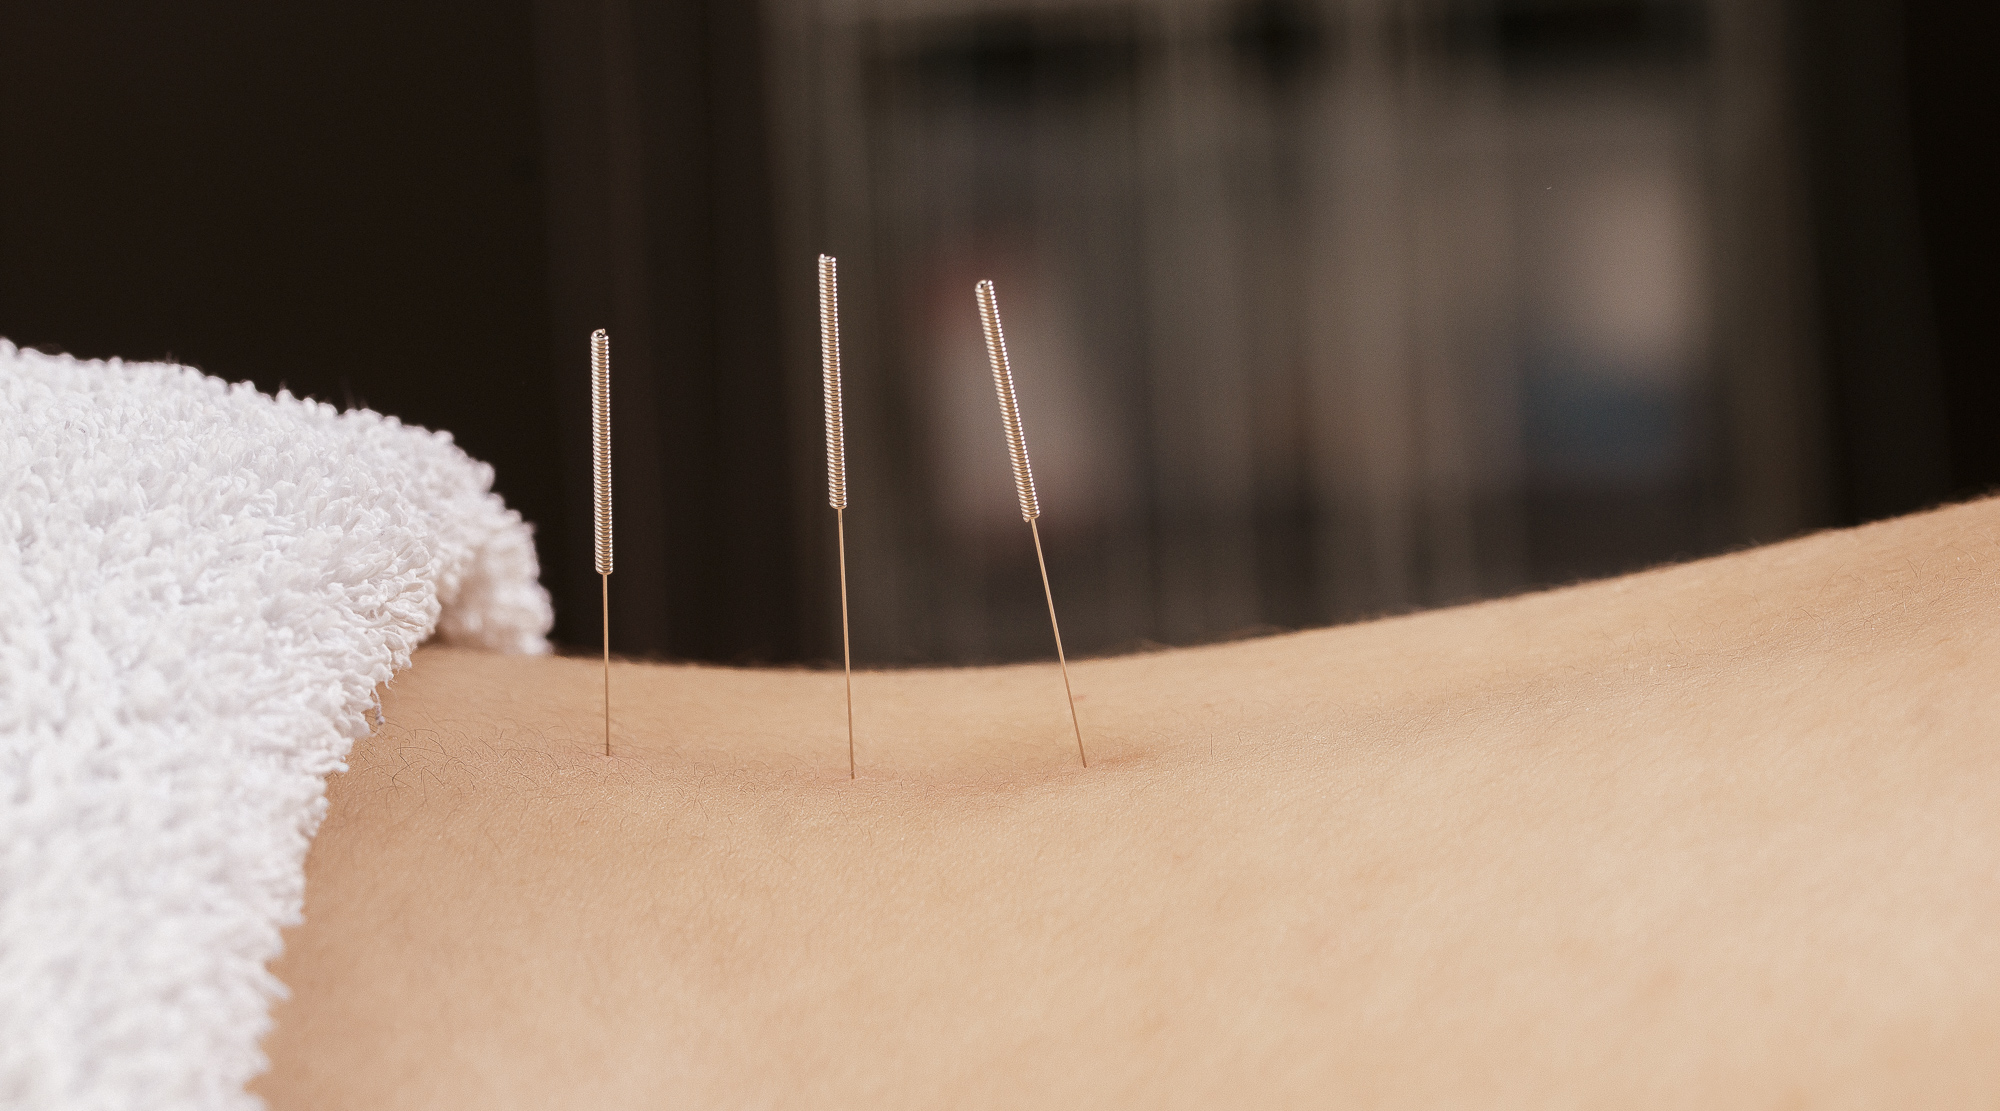 Akupunkturnadeln stimulieren Akupunkturpunkte auf dem Rücken